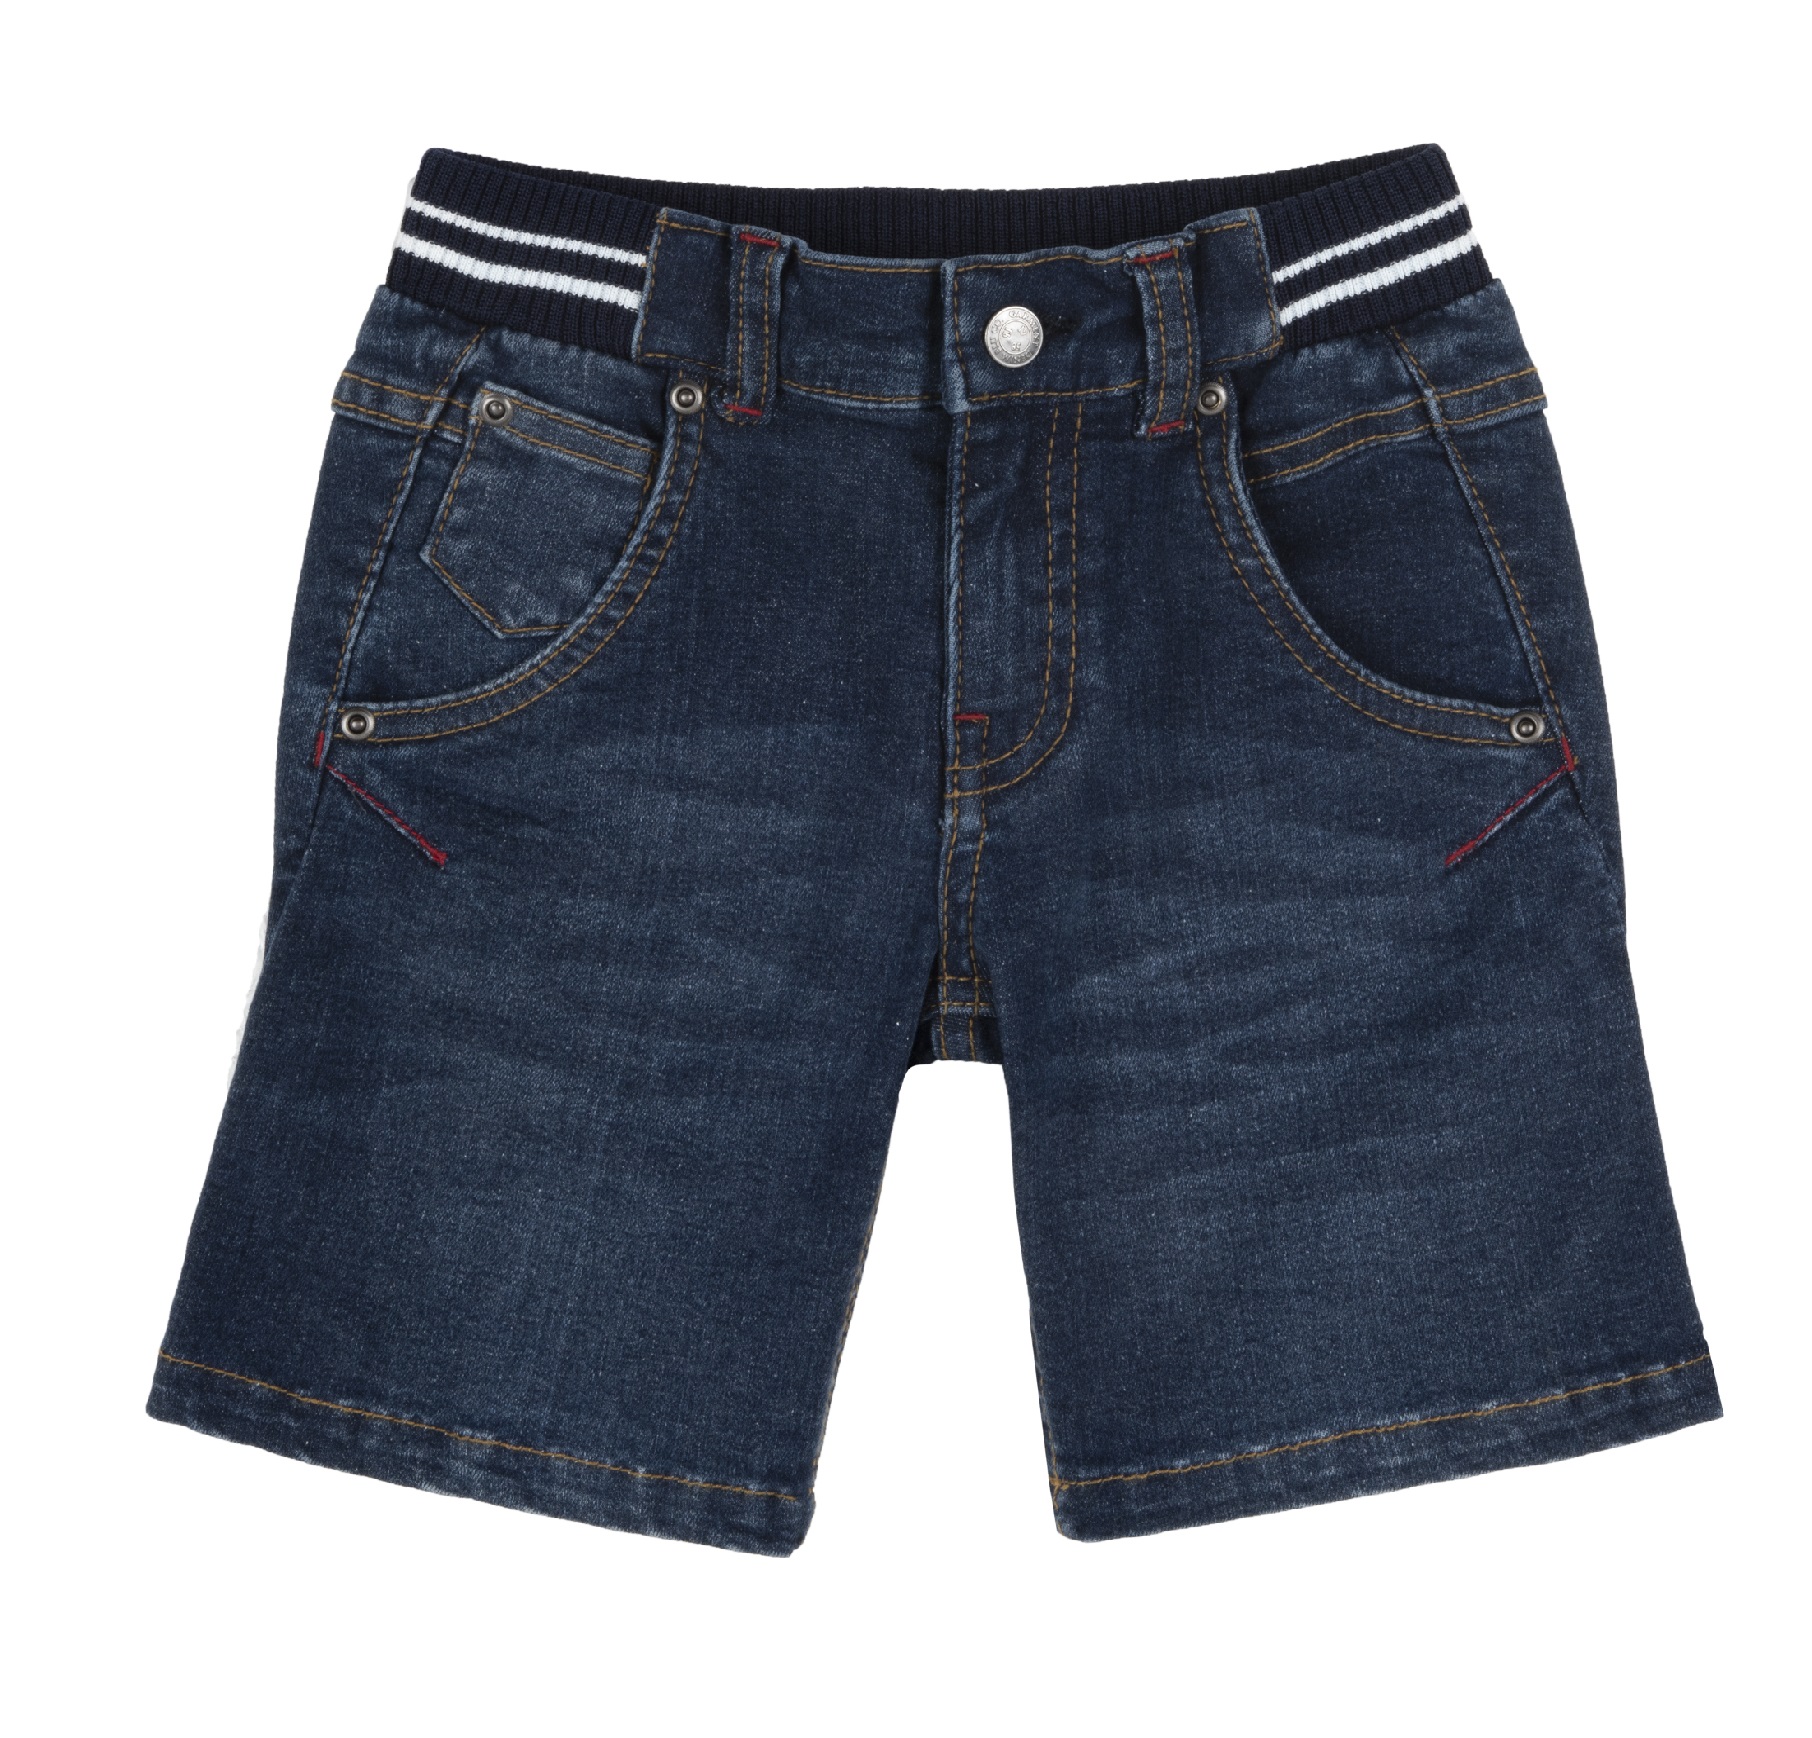 Pantaloni Scurti Copii Chicco, Albastru Inchis, 00484-62mc